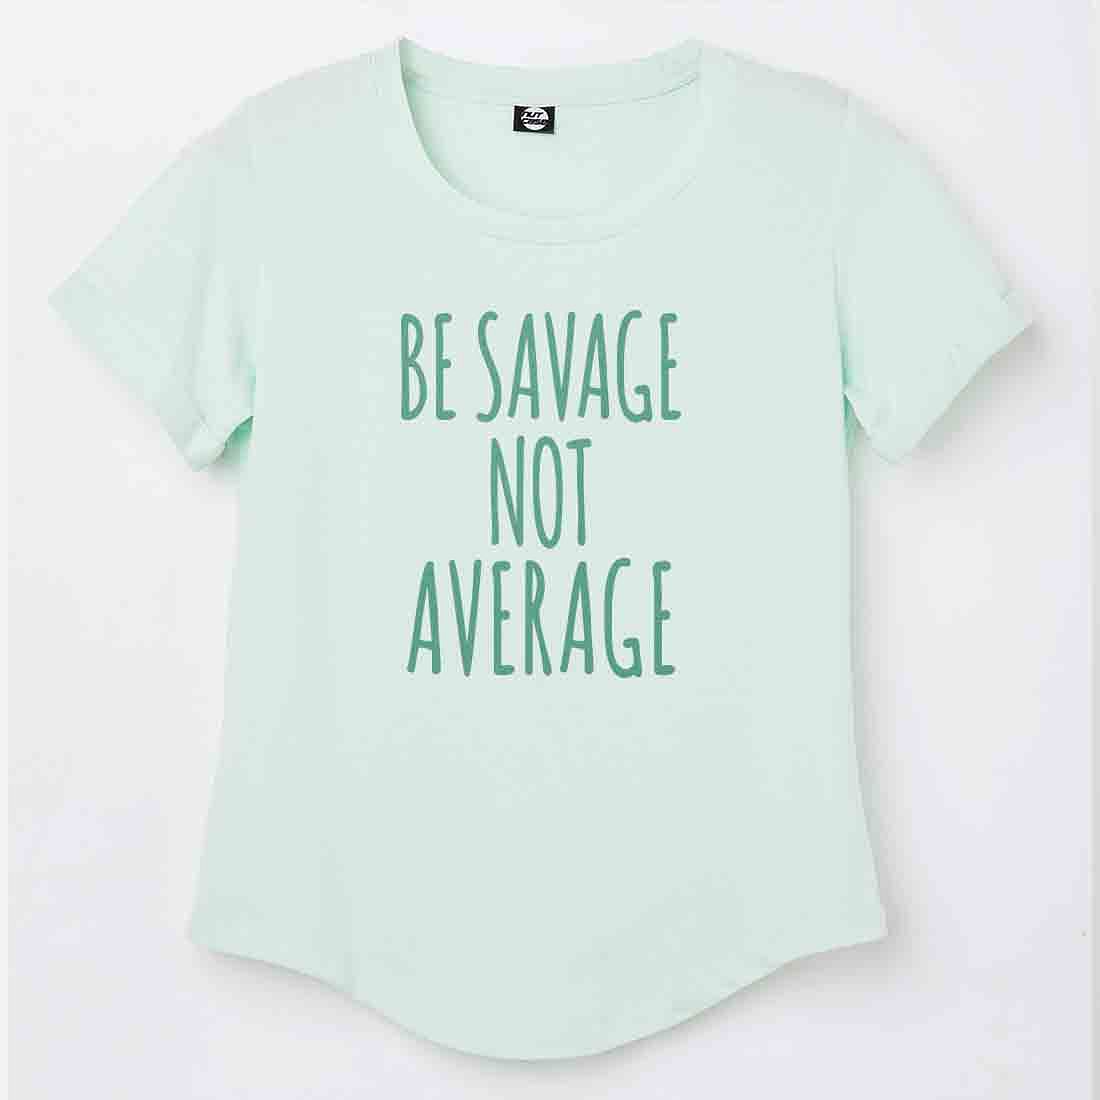 Feminist women's funny t shirt  - Be Savage Not Average Nutcase